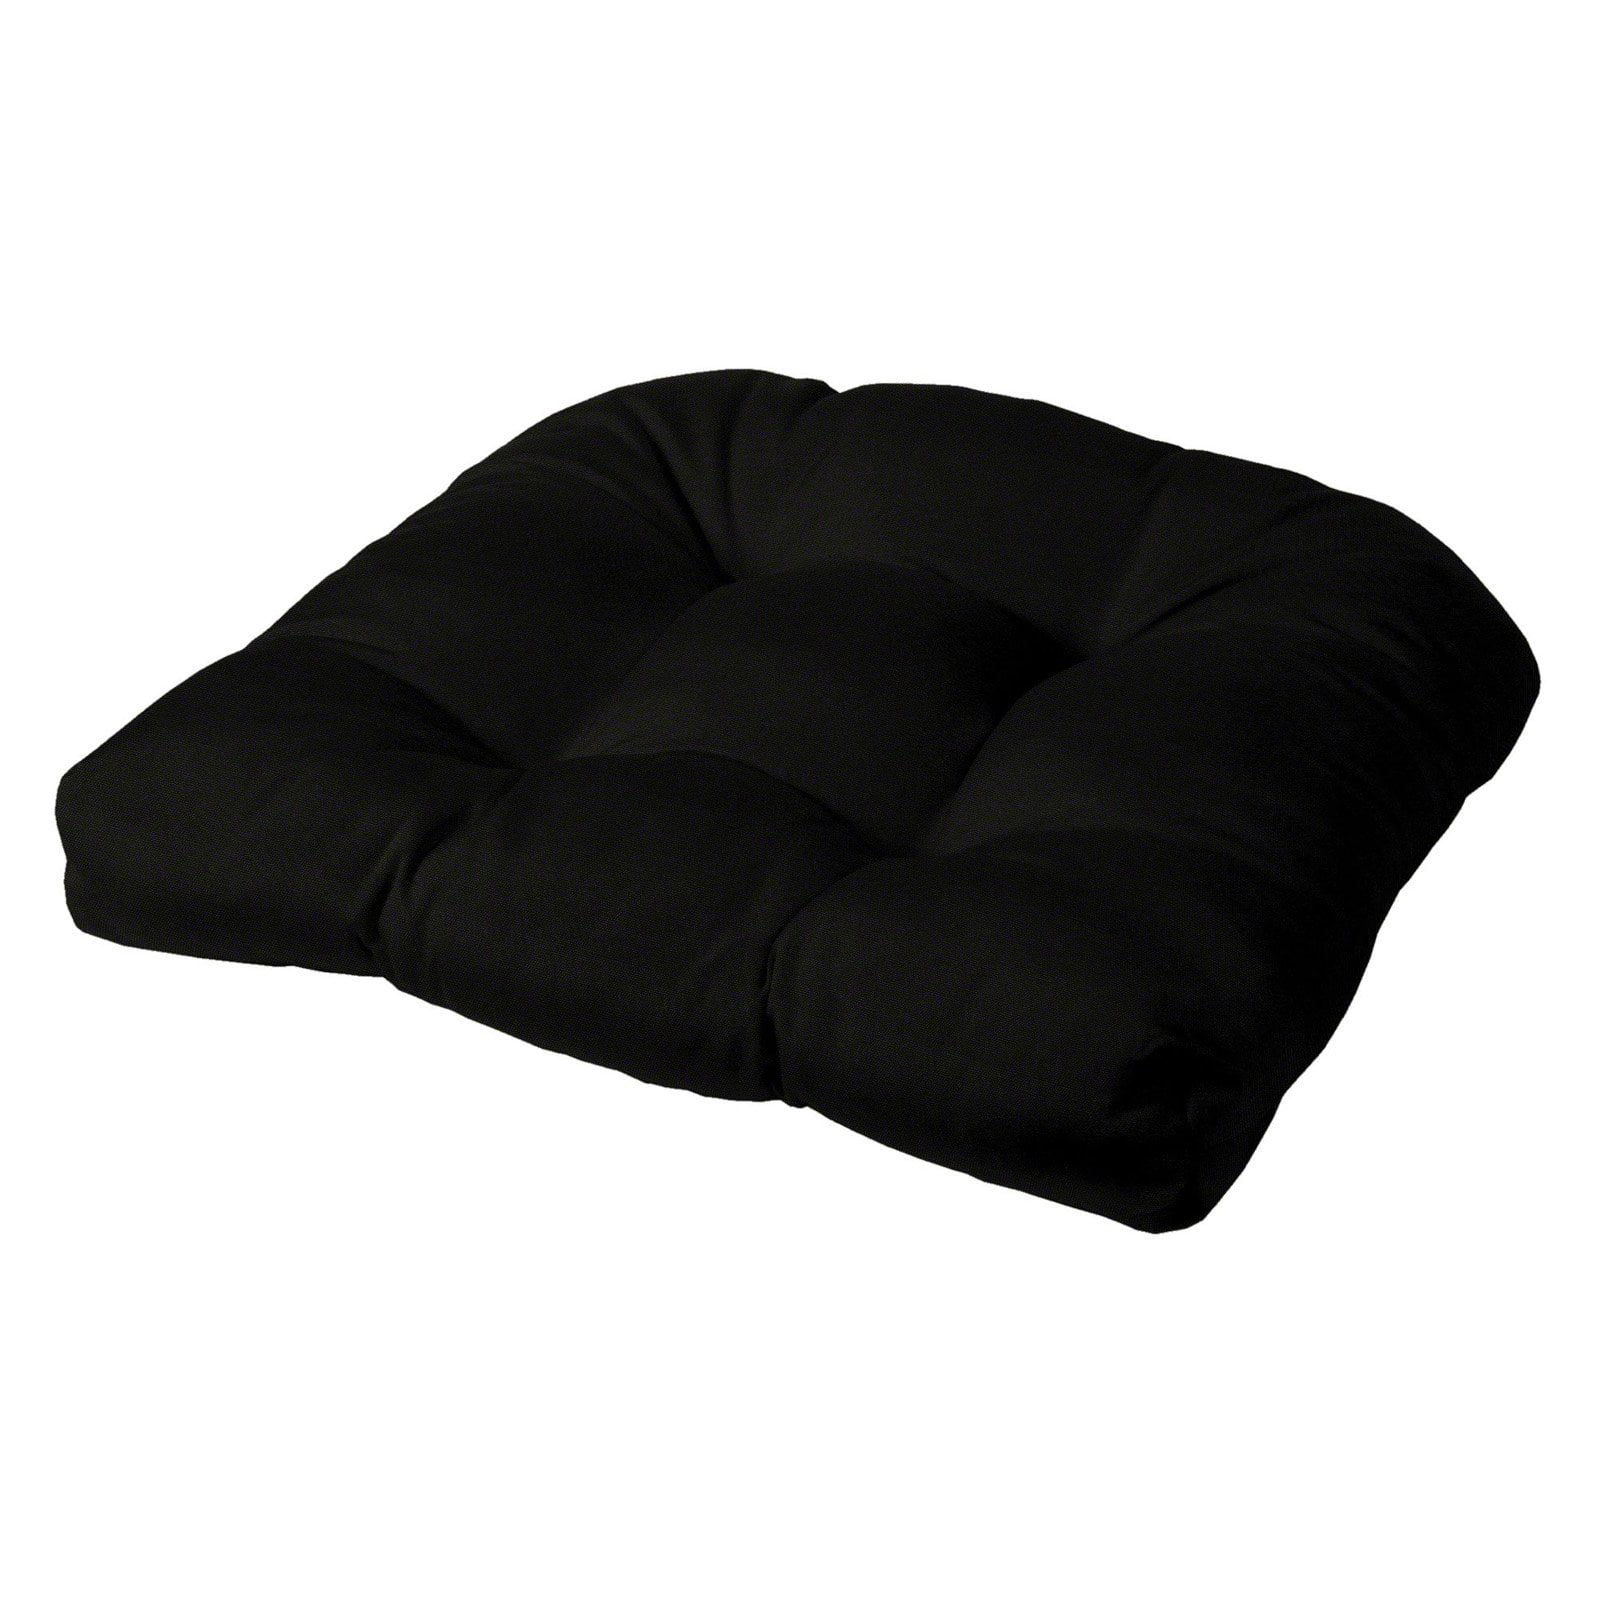 Cushion Source 21 x 19 in. Solid Tufted Sunbrella Chair 